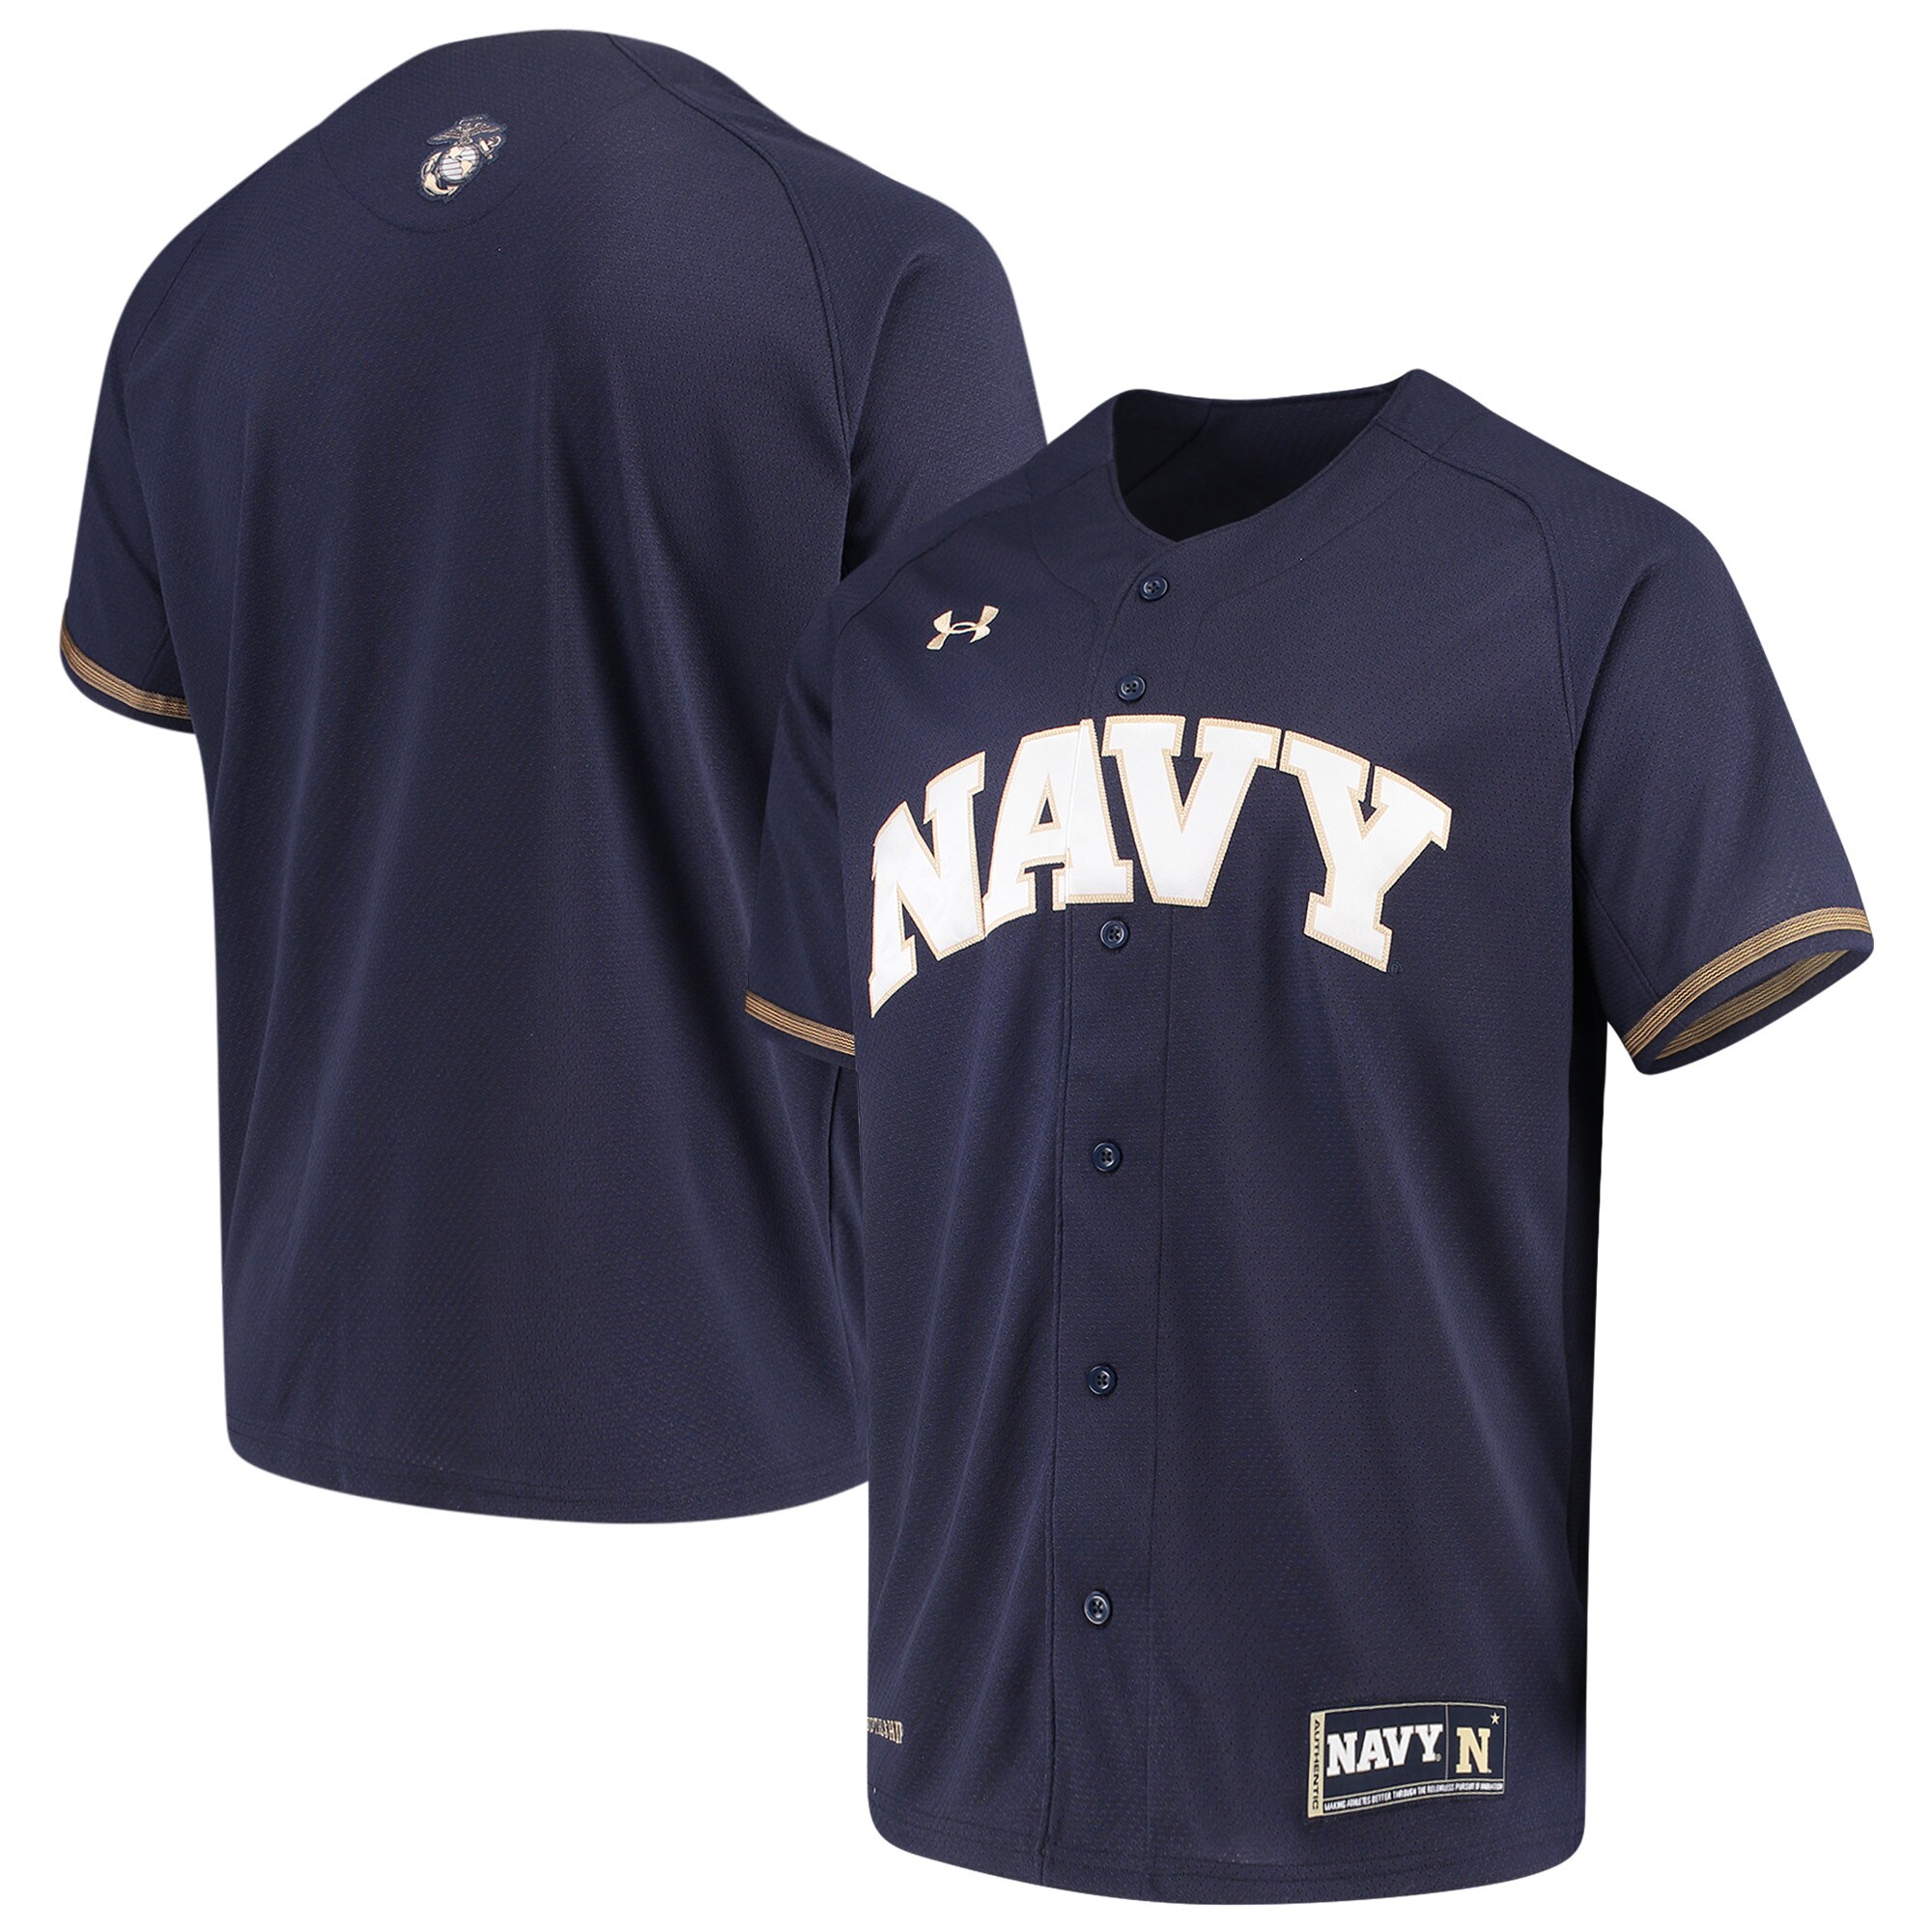 Navy Midshipmen Under Armour Performance Replica Baseball Jersey - Navy For Youth Women Men